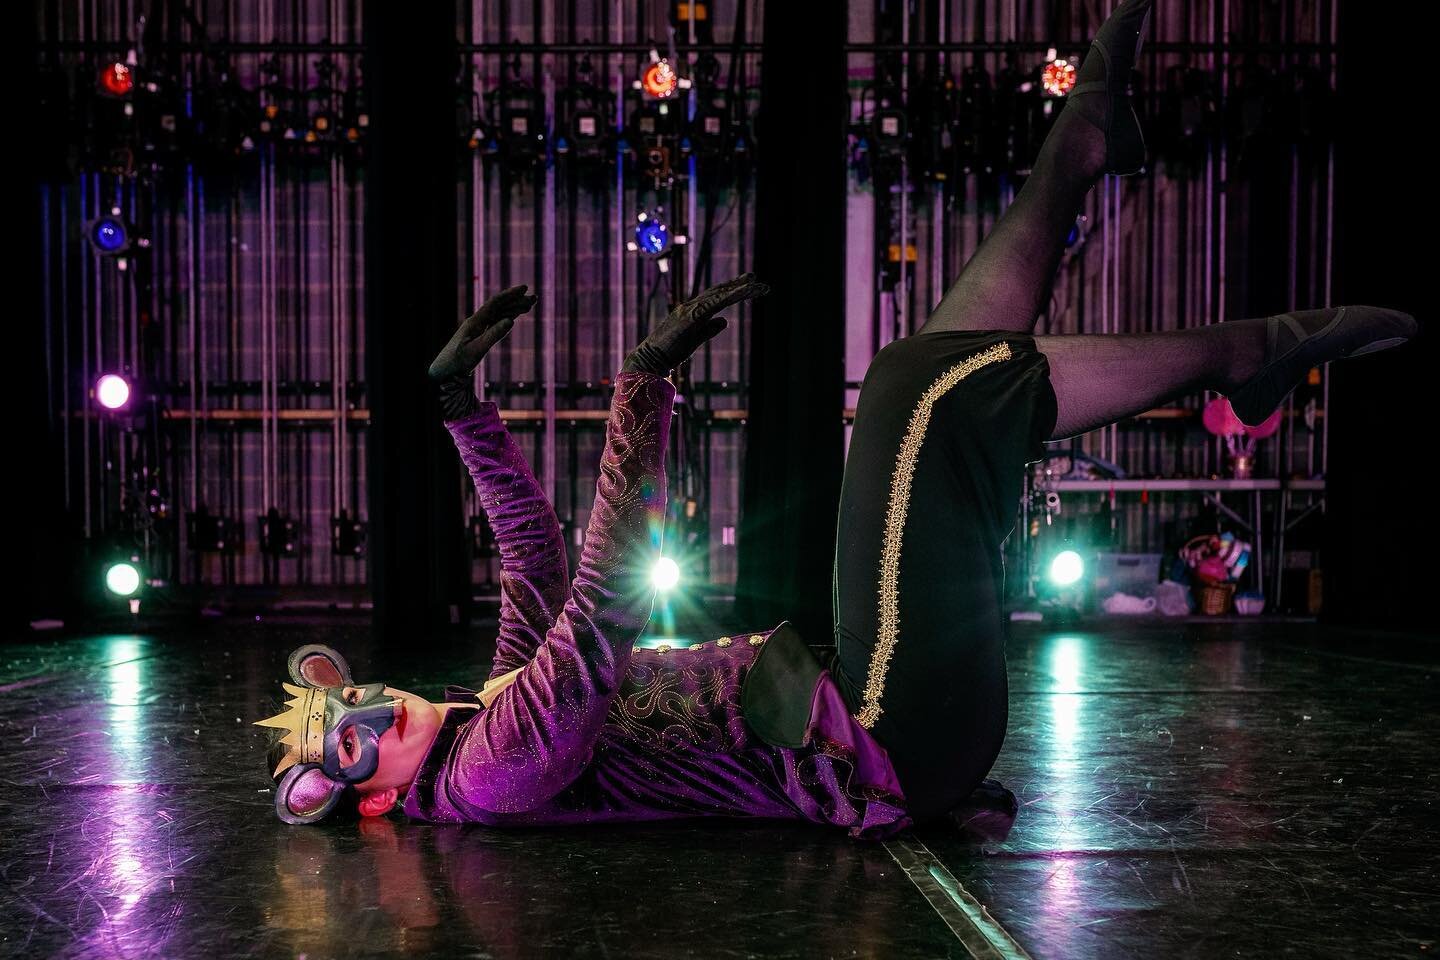 TGIF! Who else is ready for the weekend?🙋🏼&zwj;♀️🐭👑
.
.
📷 via @aaronreelphotography 
.
.
.
#ballet #balletofyorkcounty #balletschool #balletdancer #balletcompany #balletstudio #balletclass #dance #dancer #danceeducation #dancestudio #danceclass 